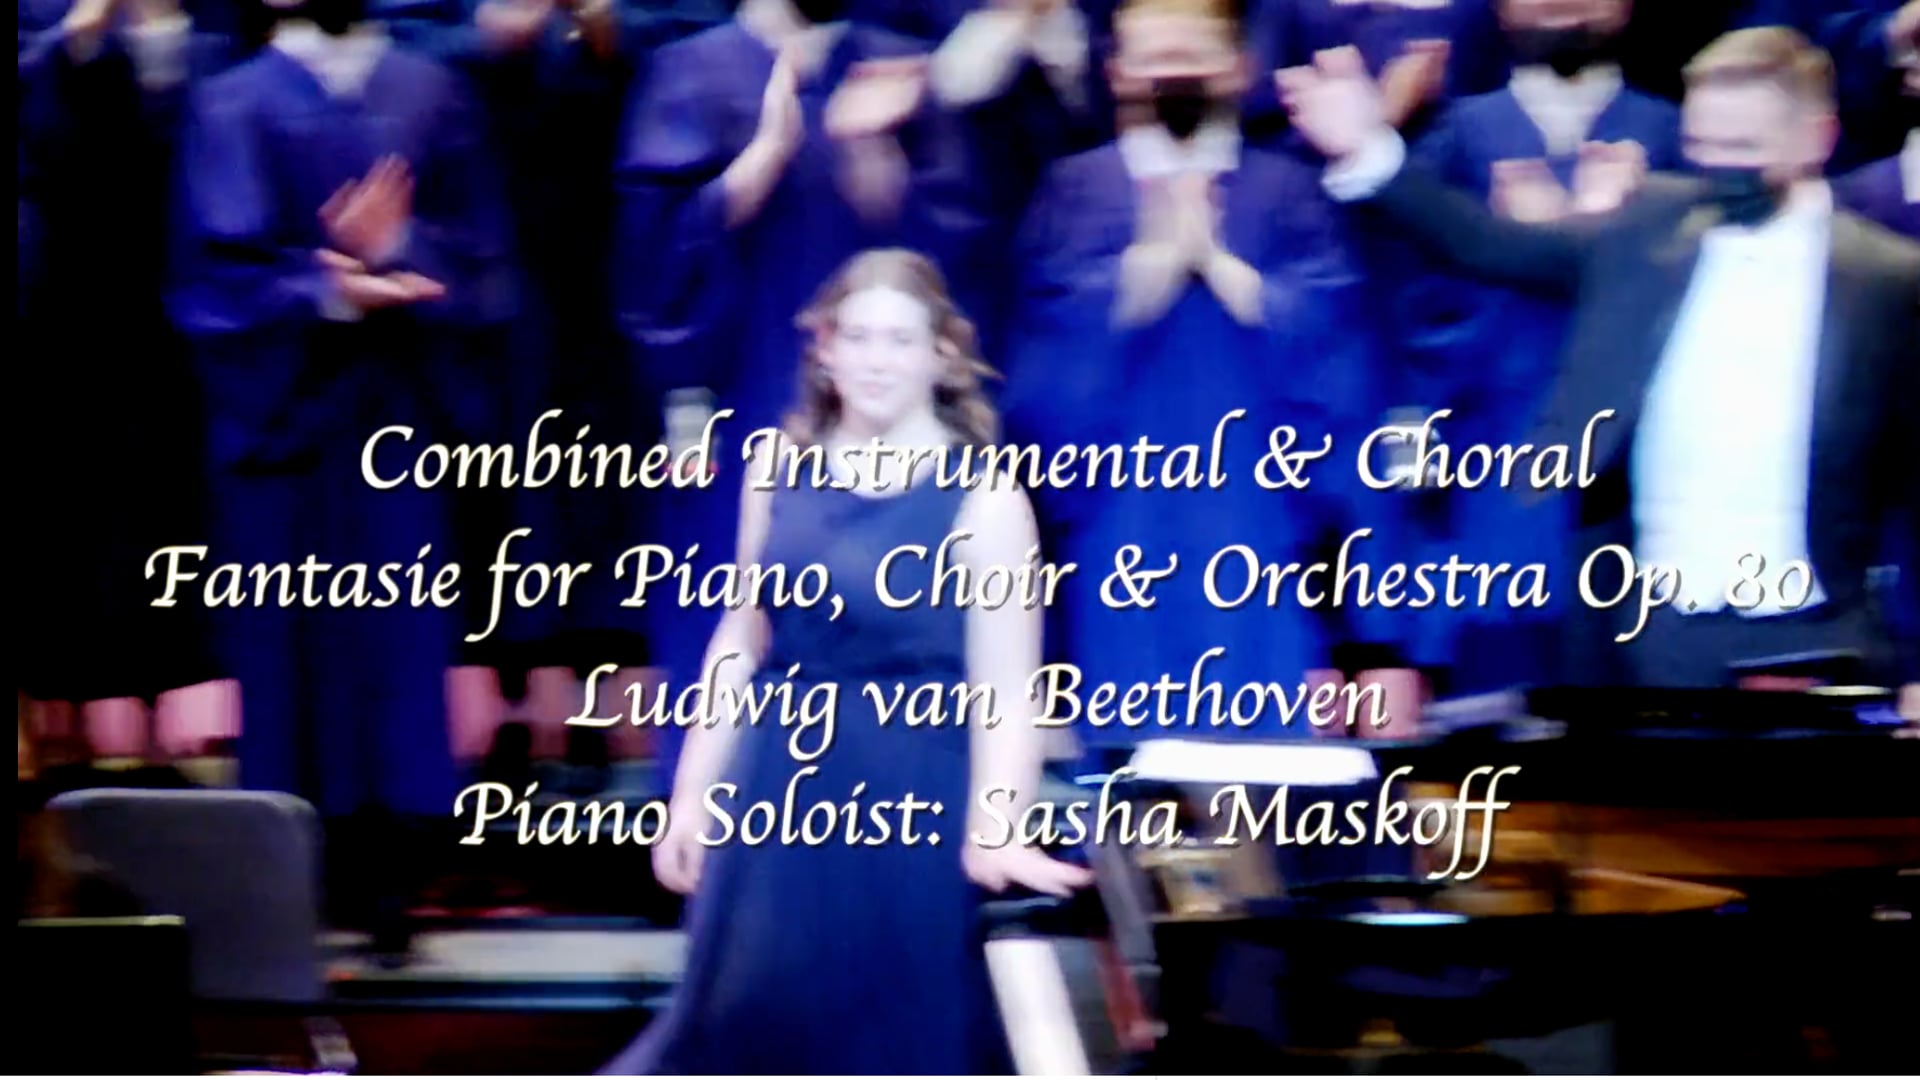 Fantasie Op. 80 by Beethoven with Sahsa Maskoff